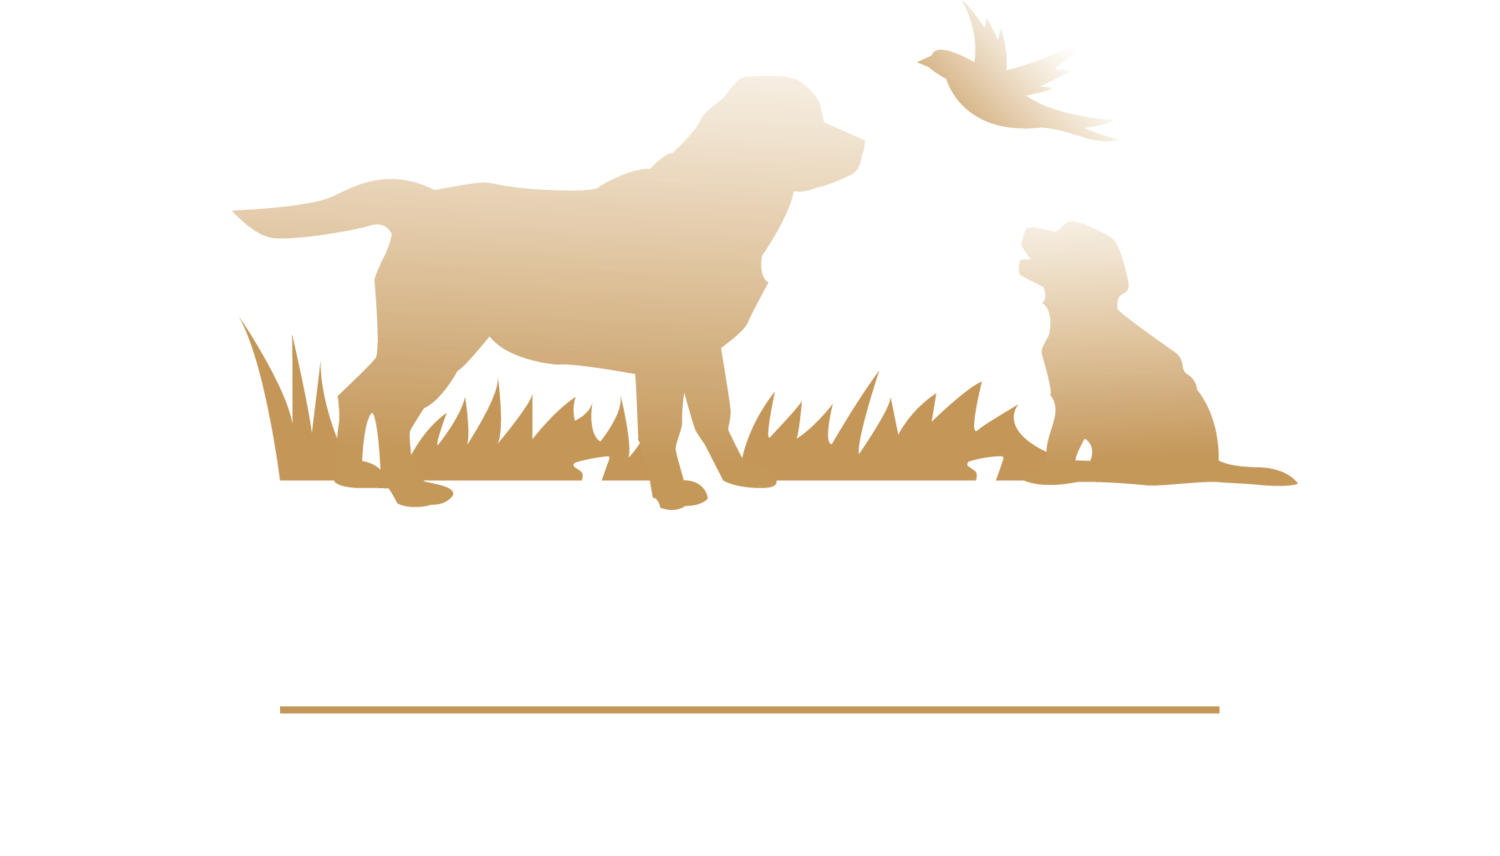 Heatherdowns Labradors, Ltd